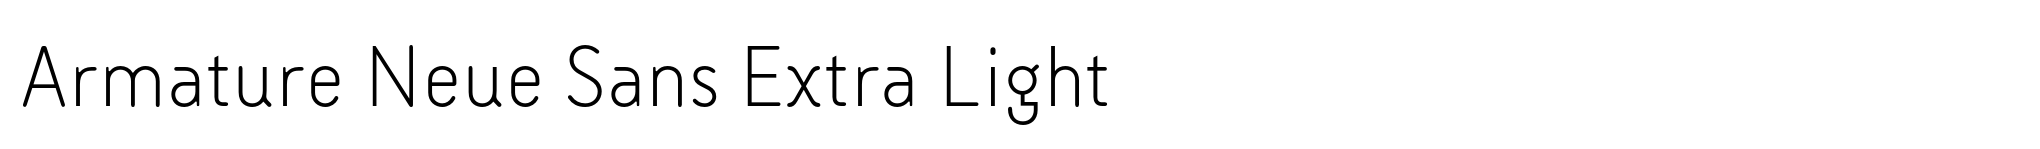 Armature Neue Sans Extra Light image